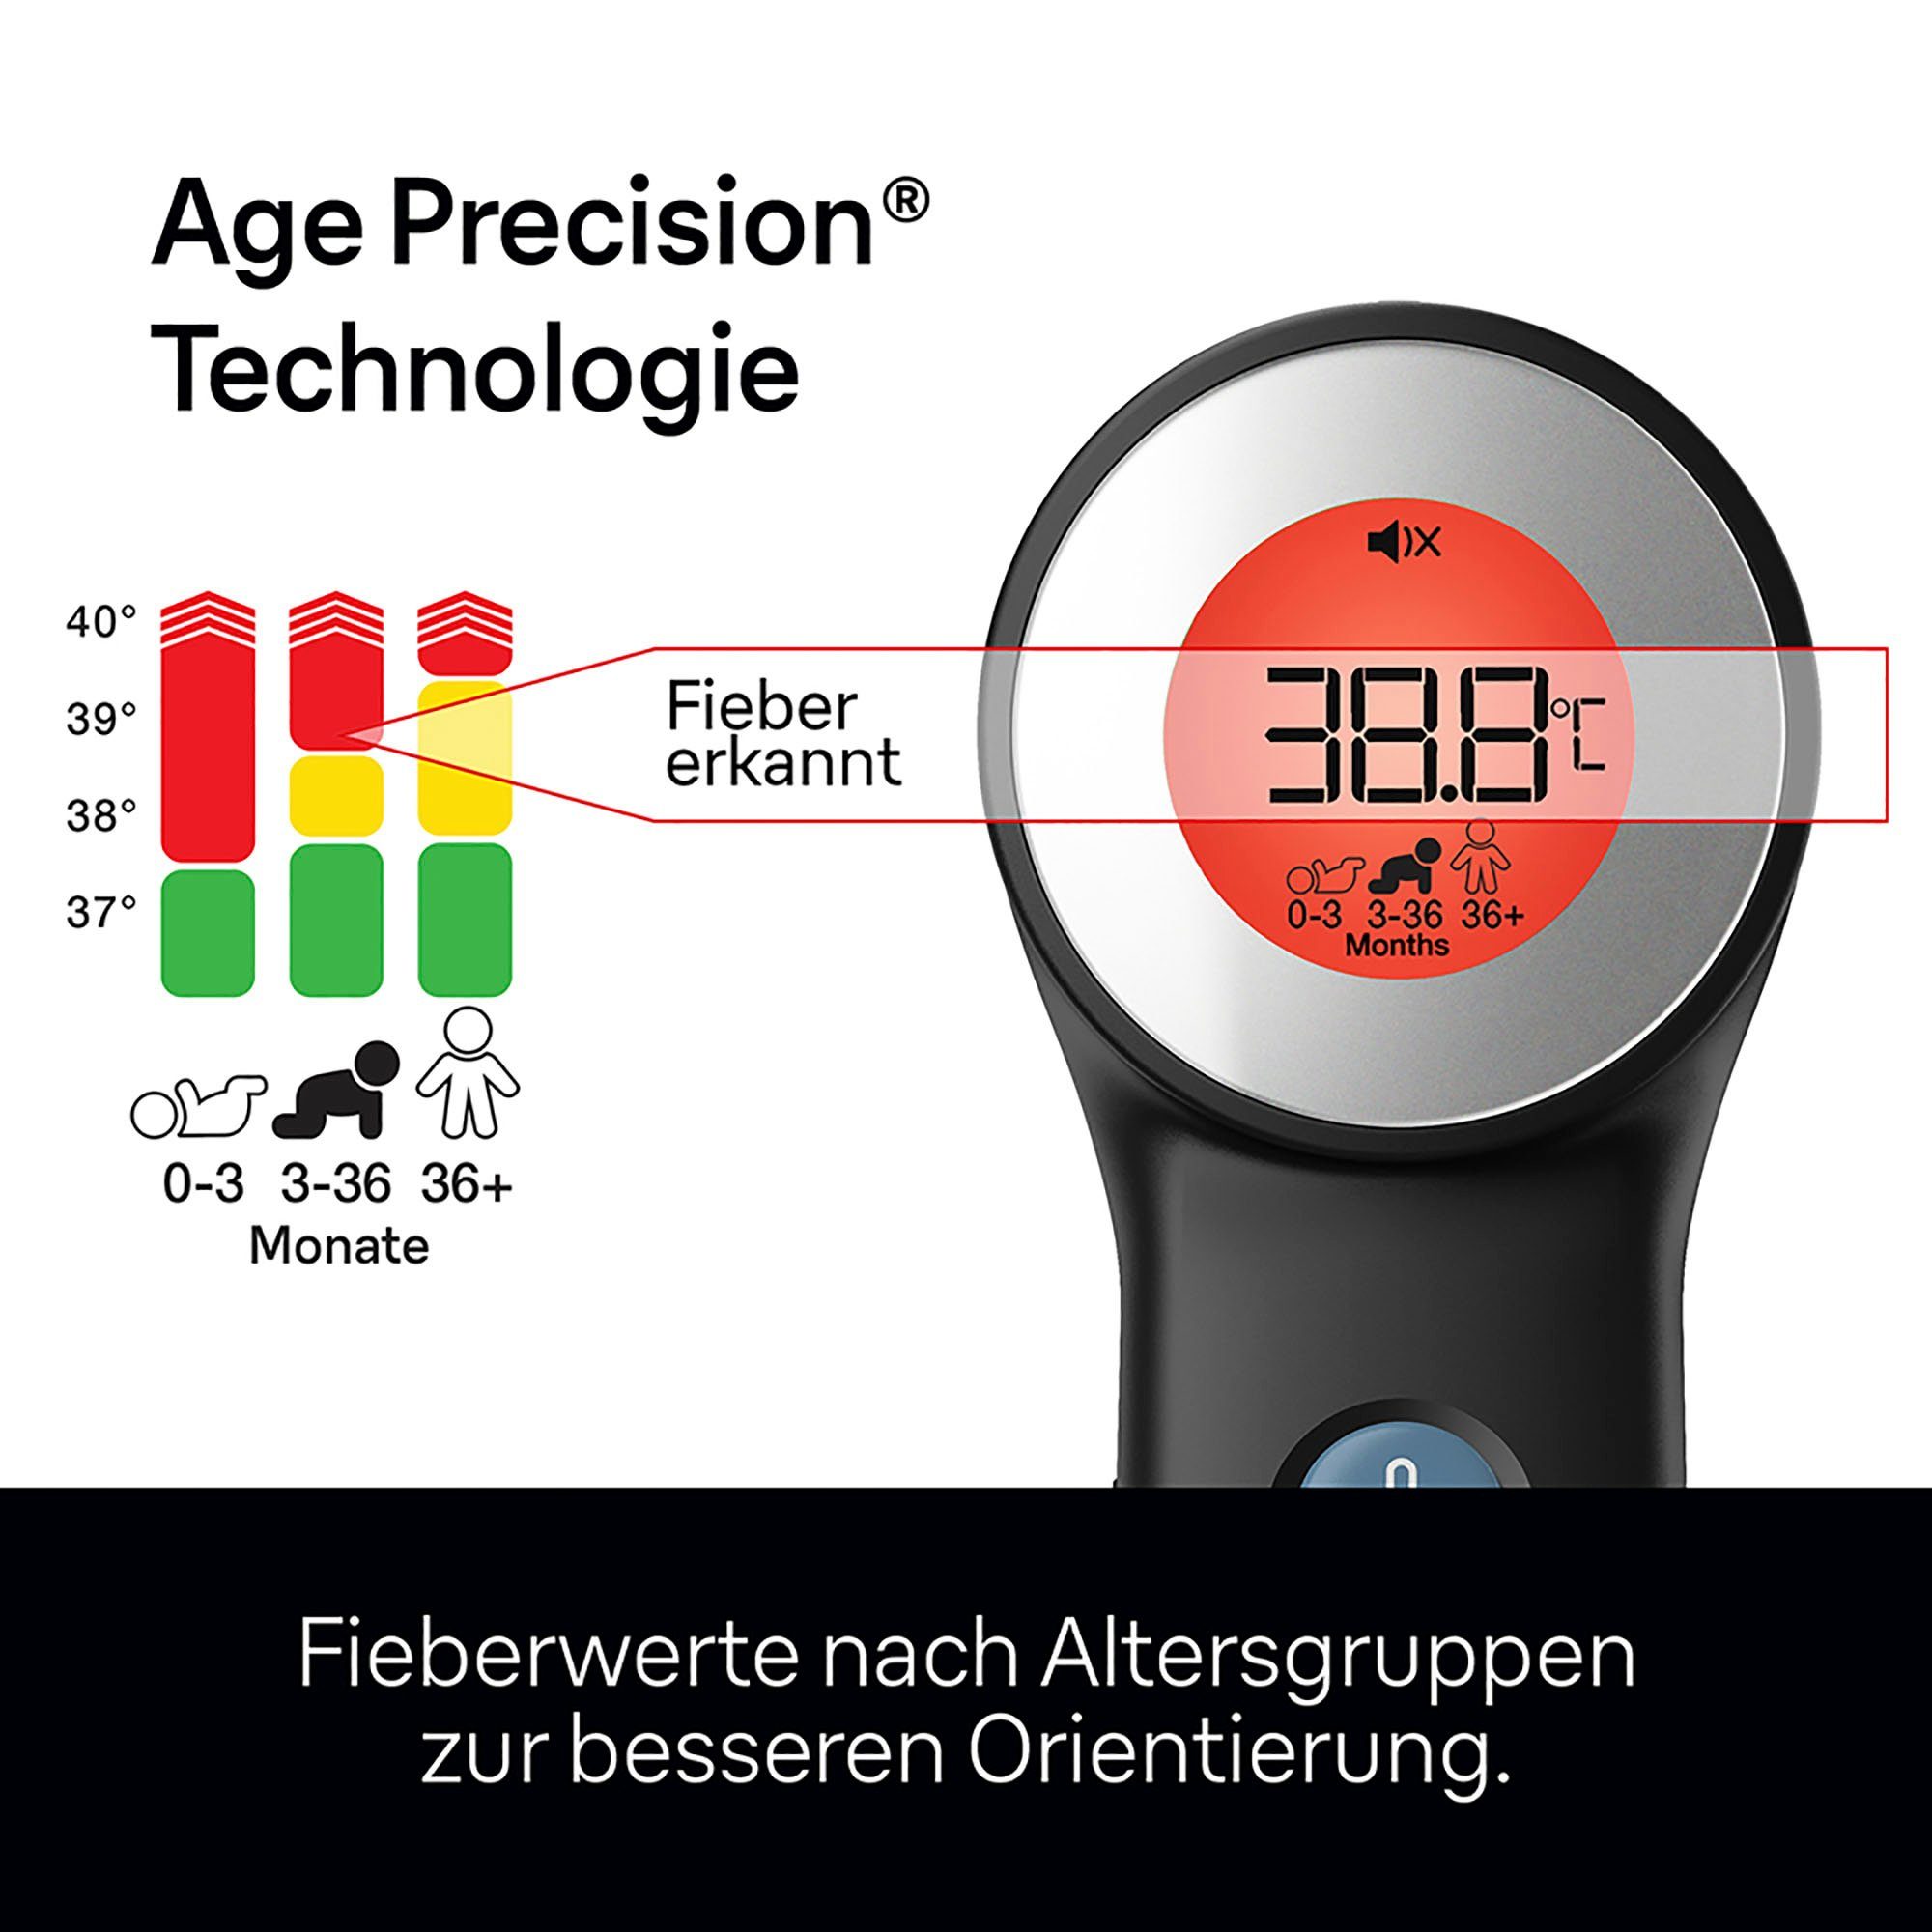 mit 7 BNT400B, SensianTM Braun Age Fieberthermometer Technology Stirnthermometer berührungsloses Precision®